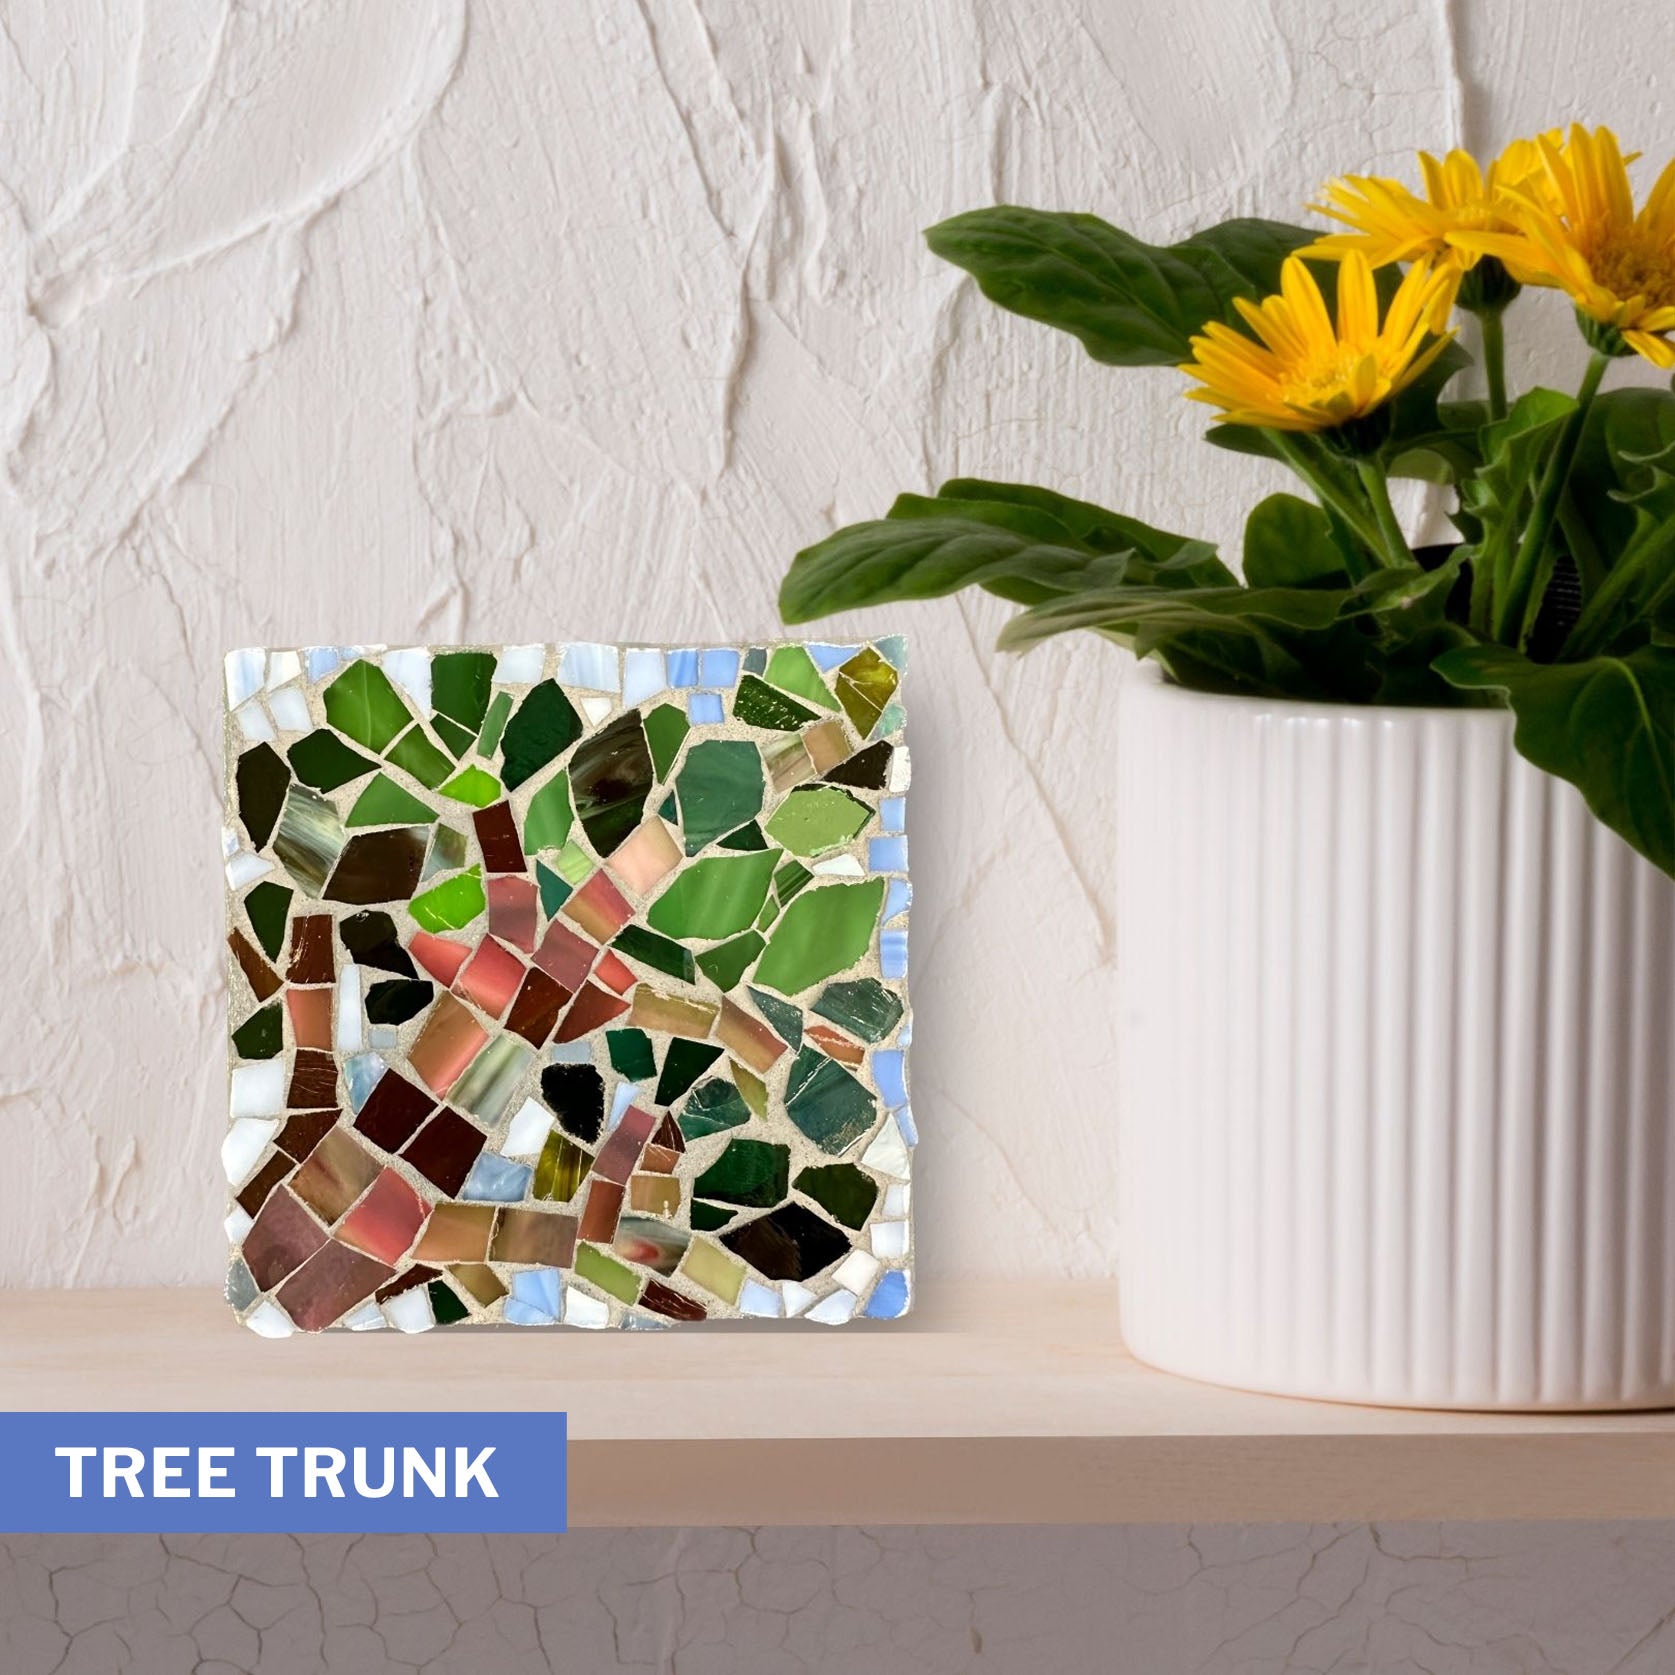 4" Nature Tiles – Choose Your Design